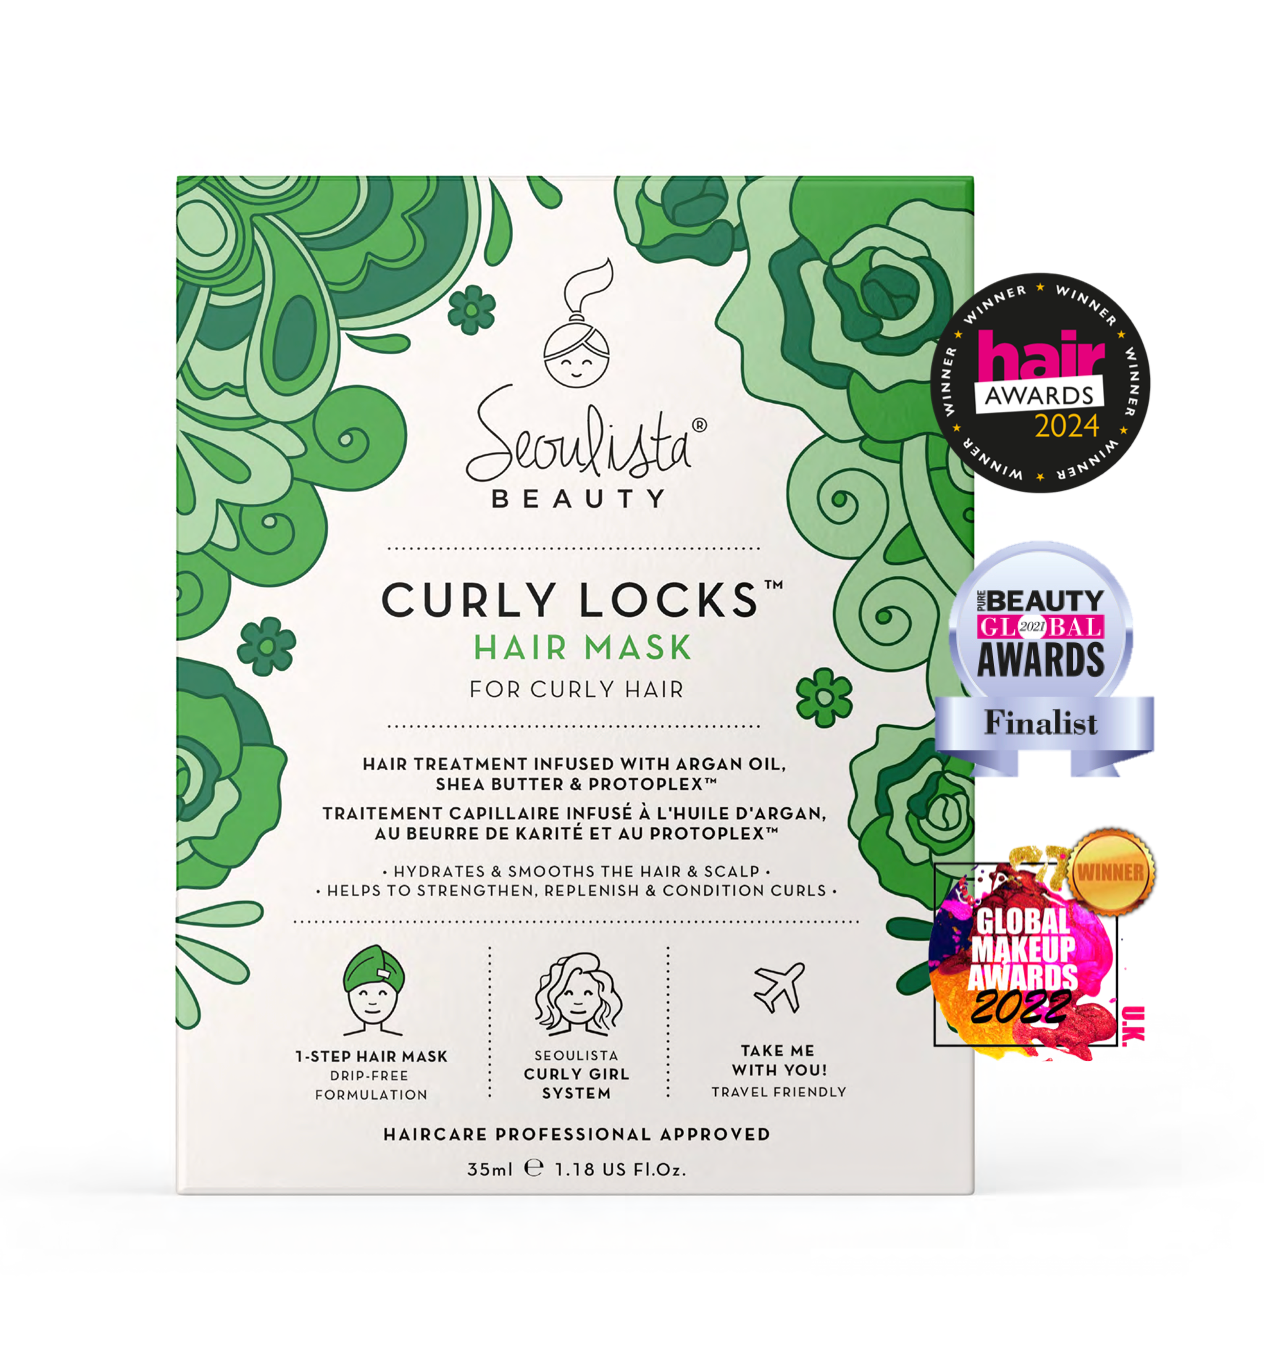 Seoulista Curly Locks® Hair Mask